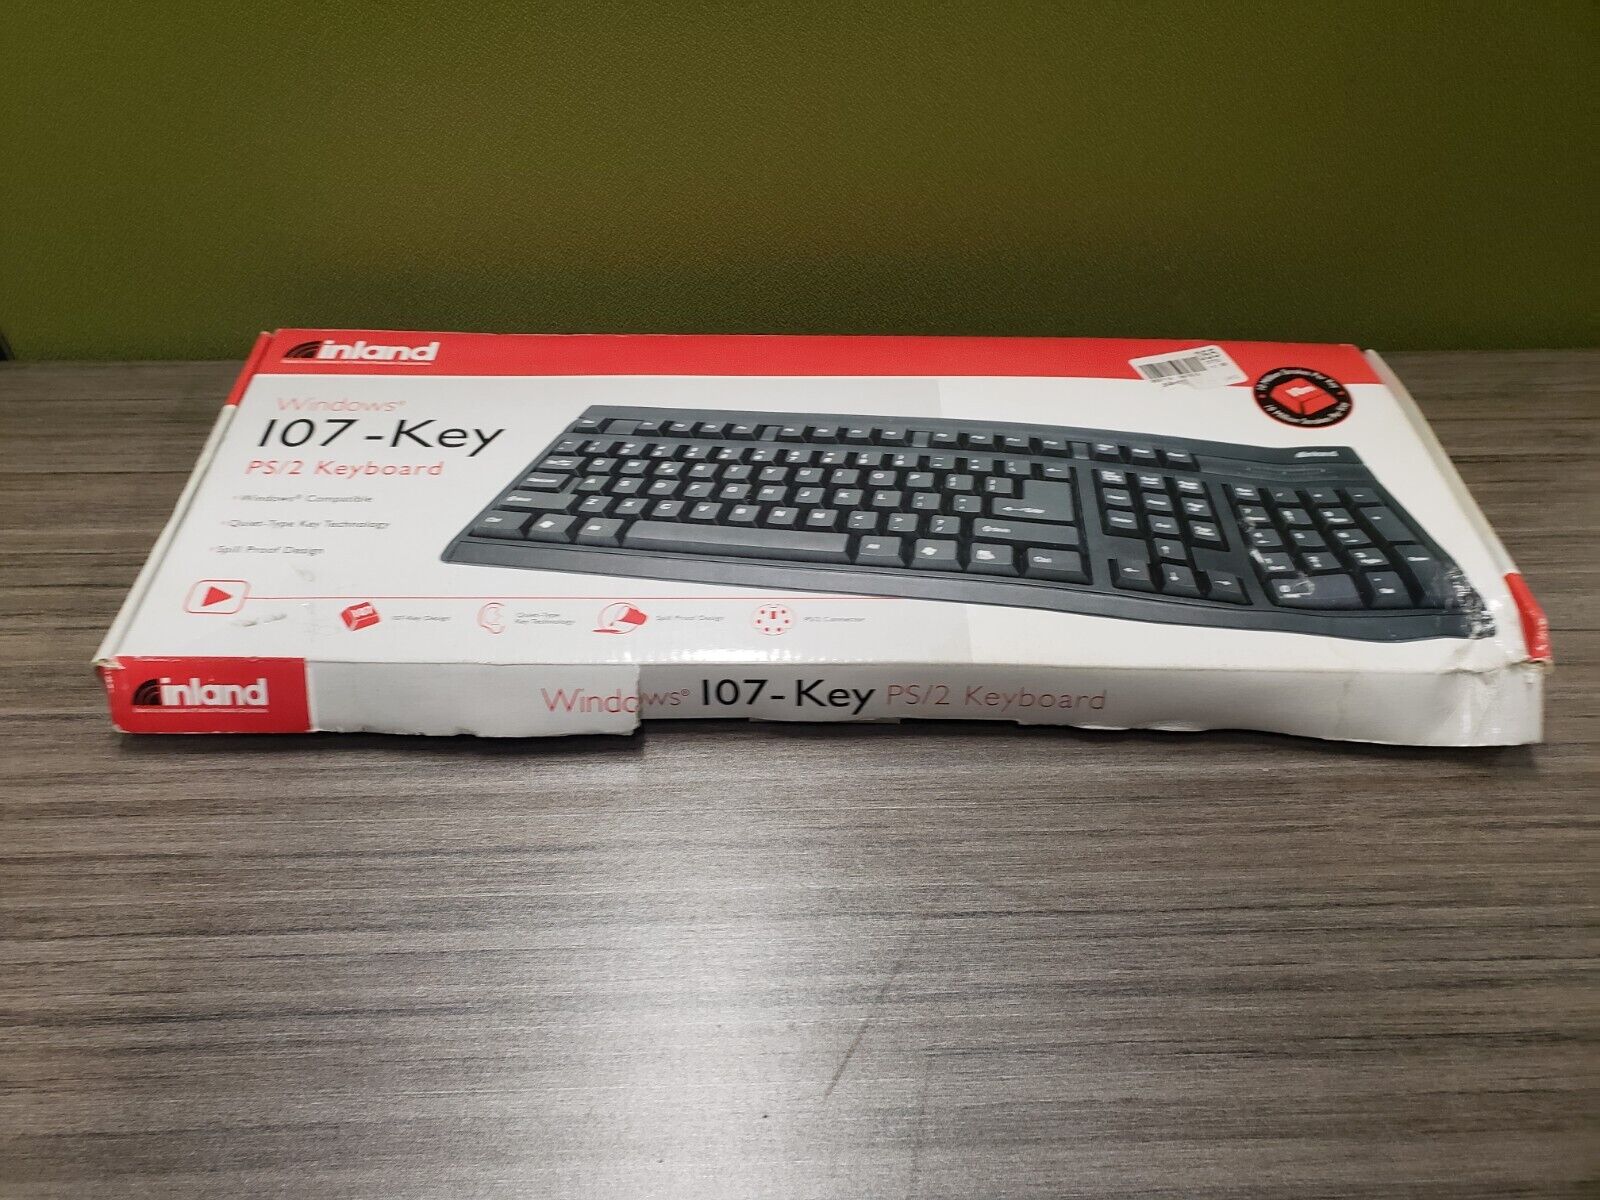 Inland Windows 107 Key PS/2 Keyboard Quiet Type Spill Proof MC855718